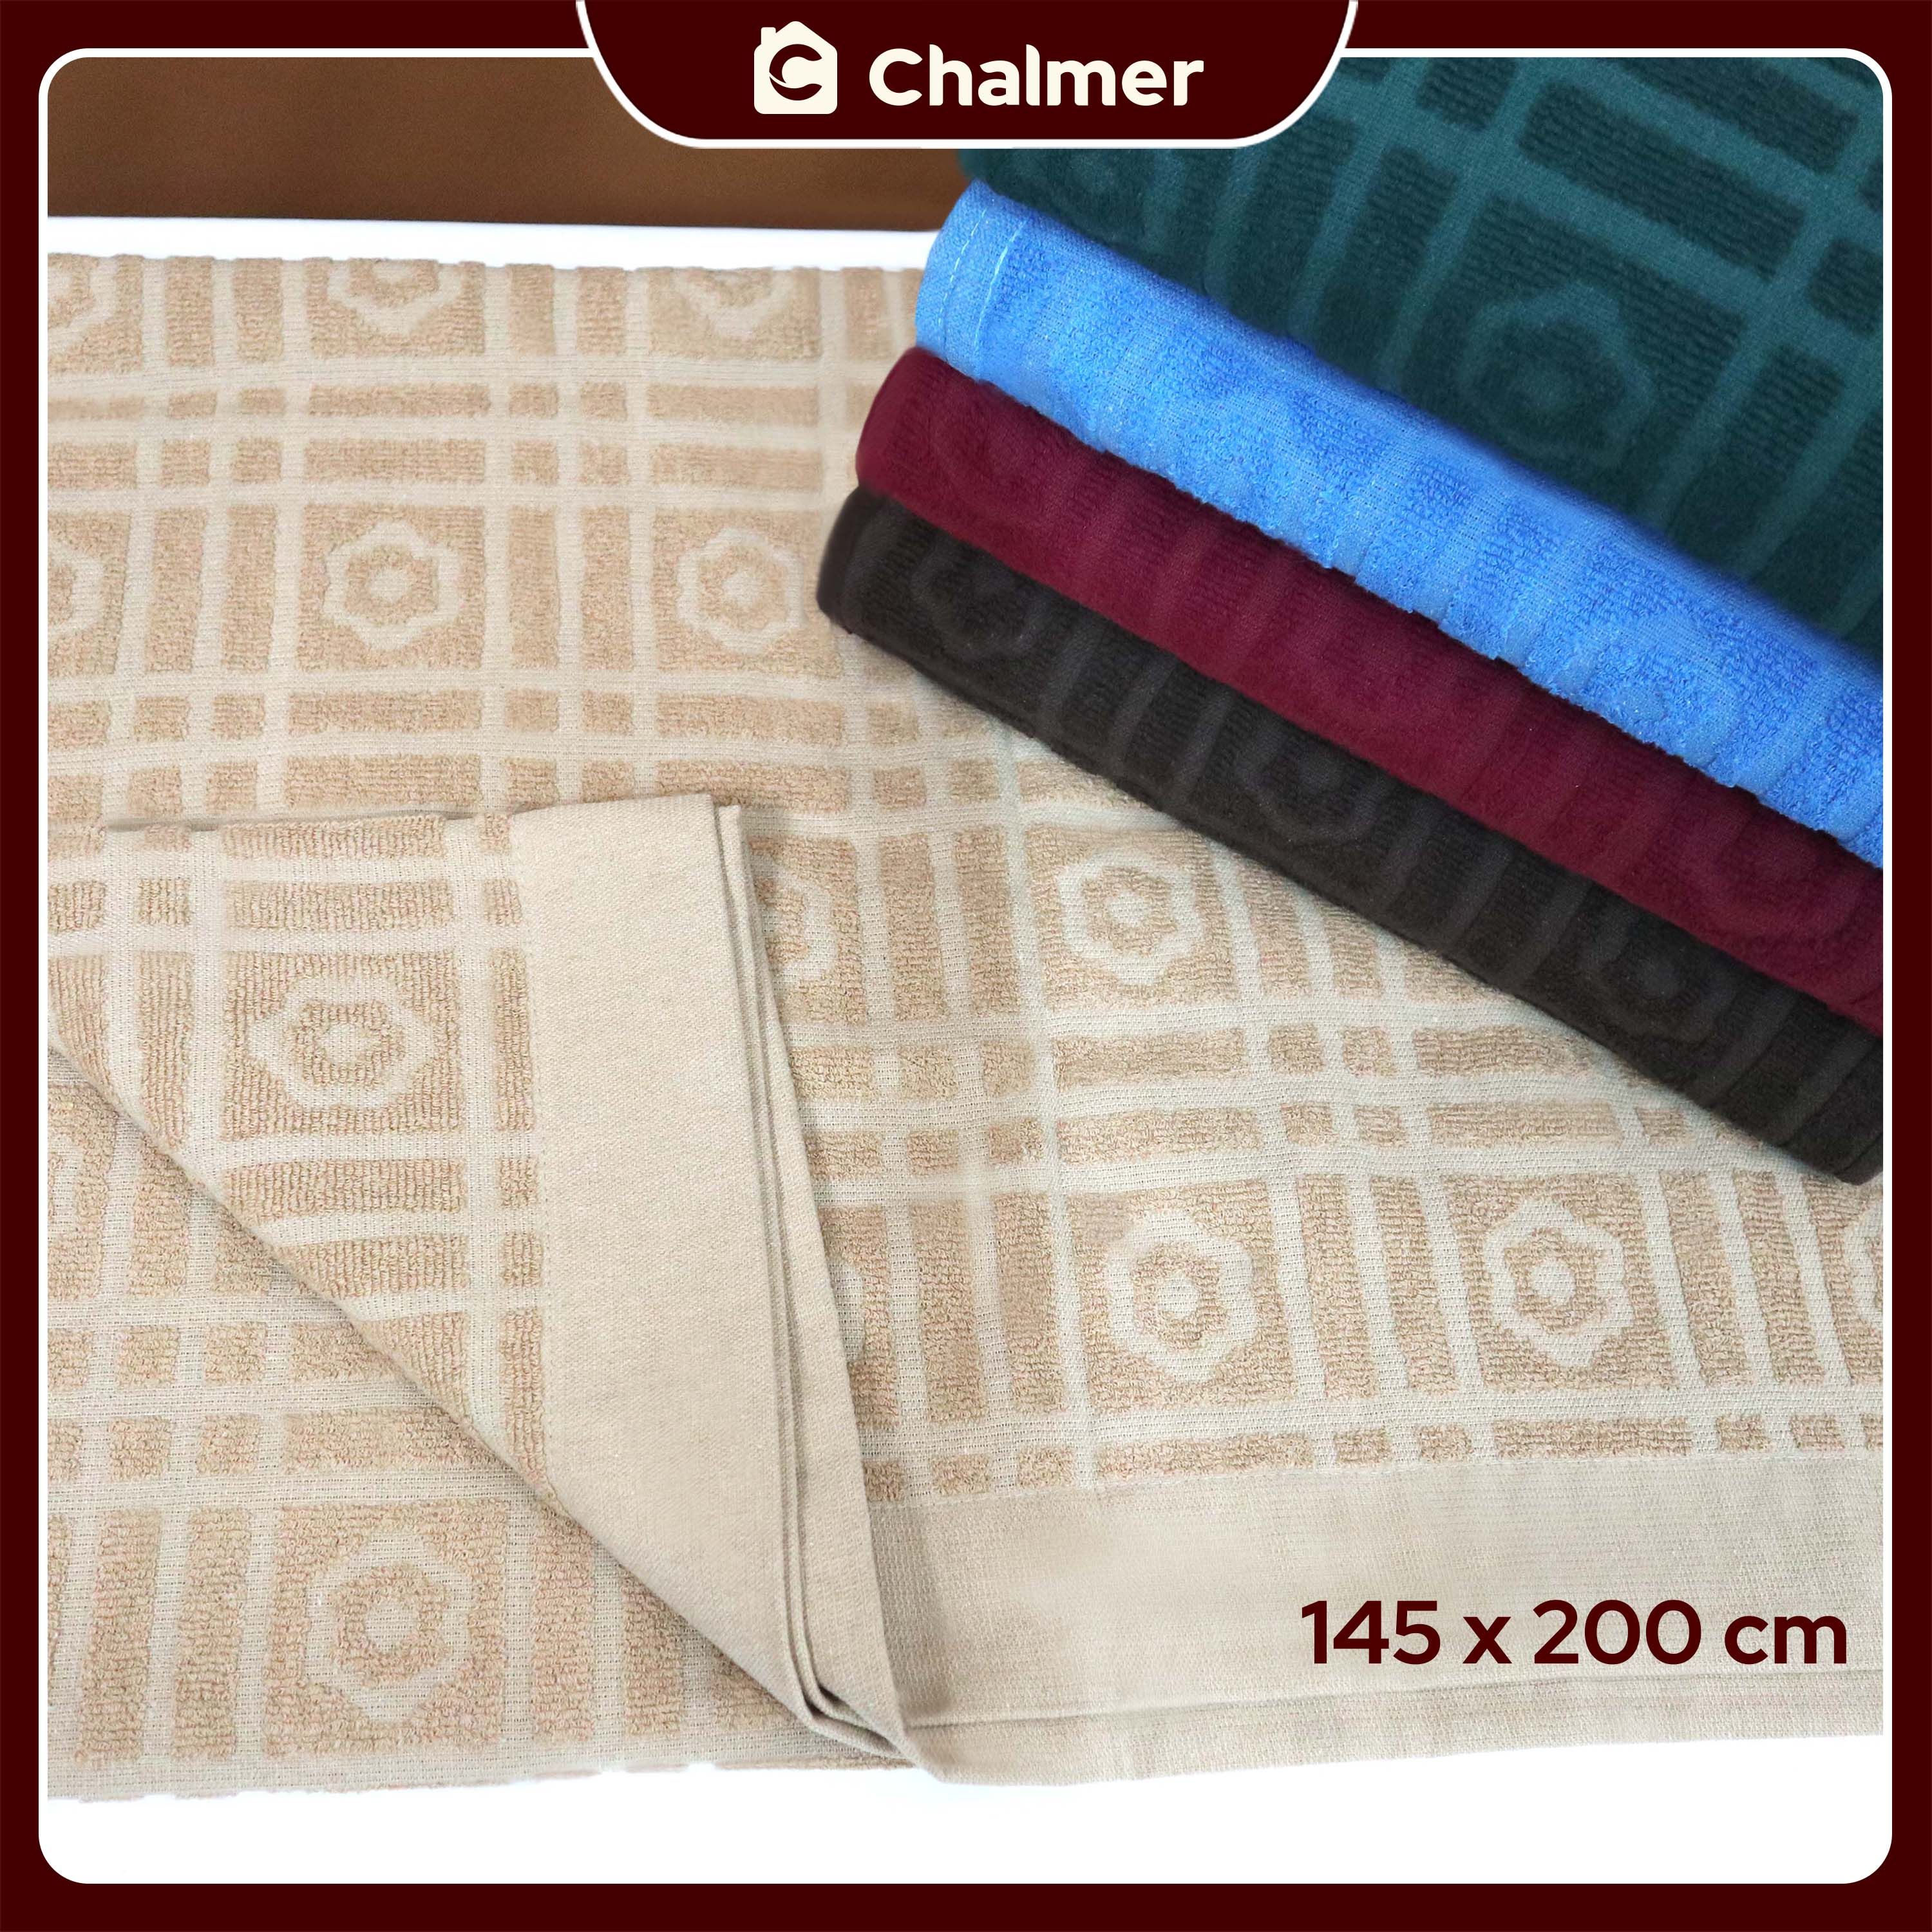 Selimut Katun Merek Chalmer Ukuran 145x200 Terry Cloth Towel Blanket - Dark Green - 5